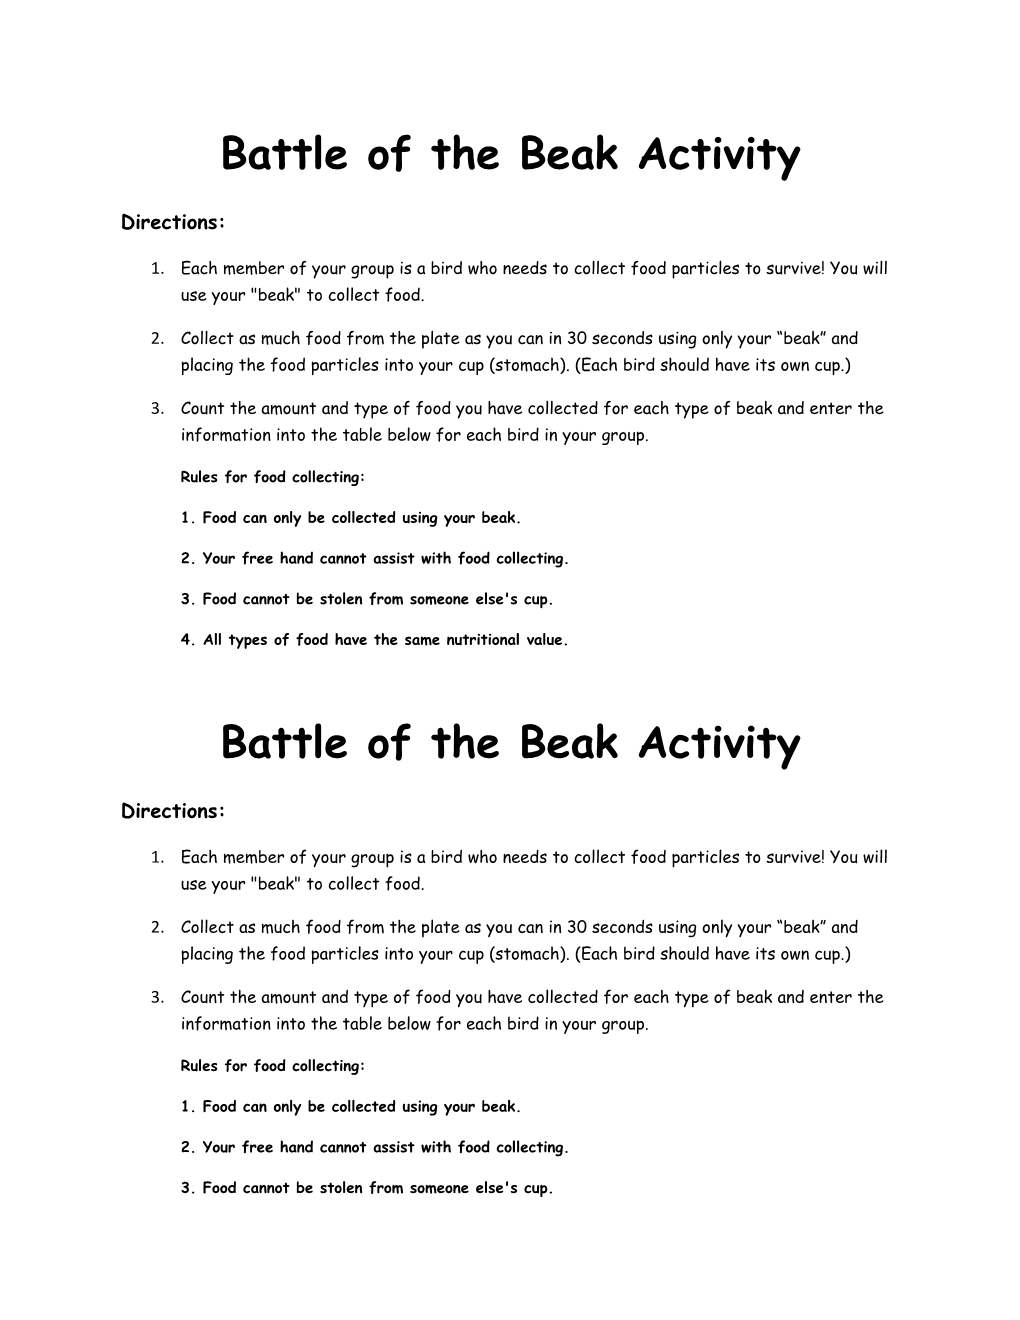 Battle of the Beak Activity